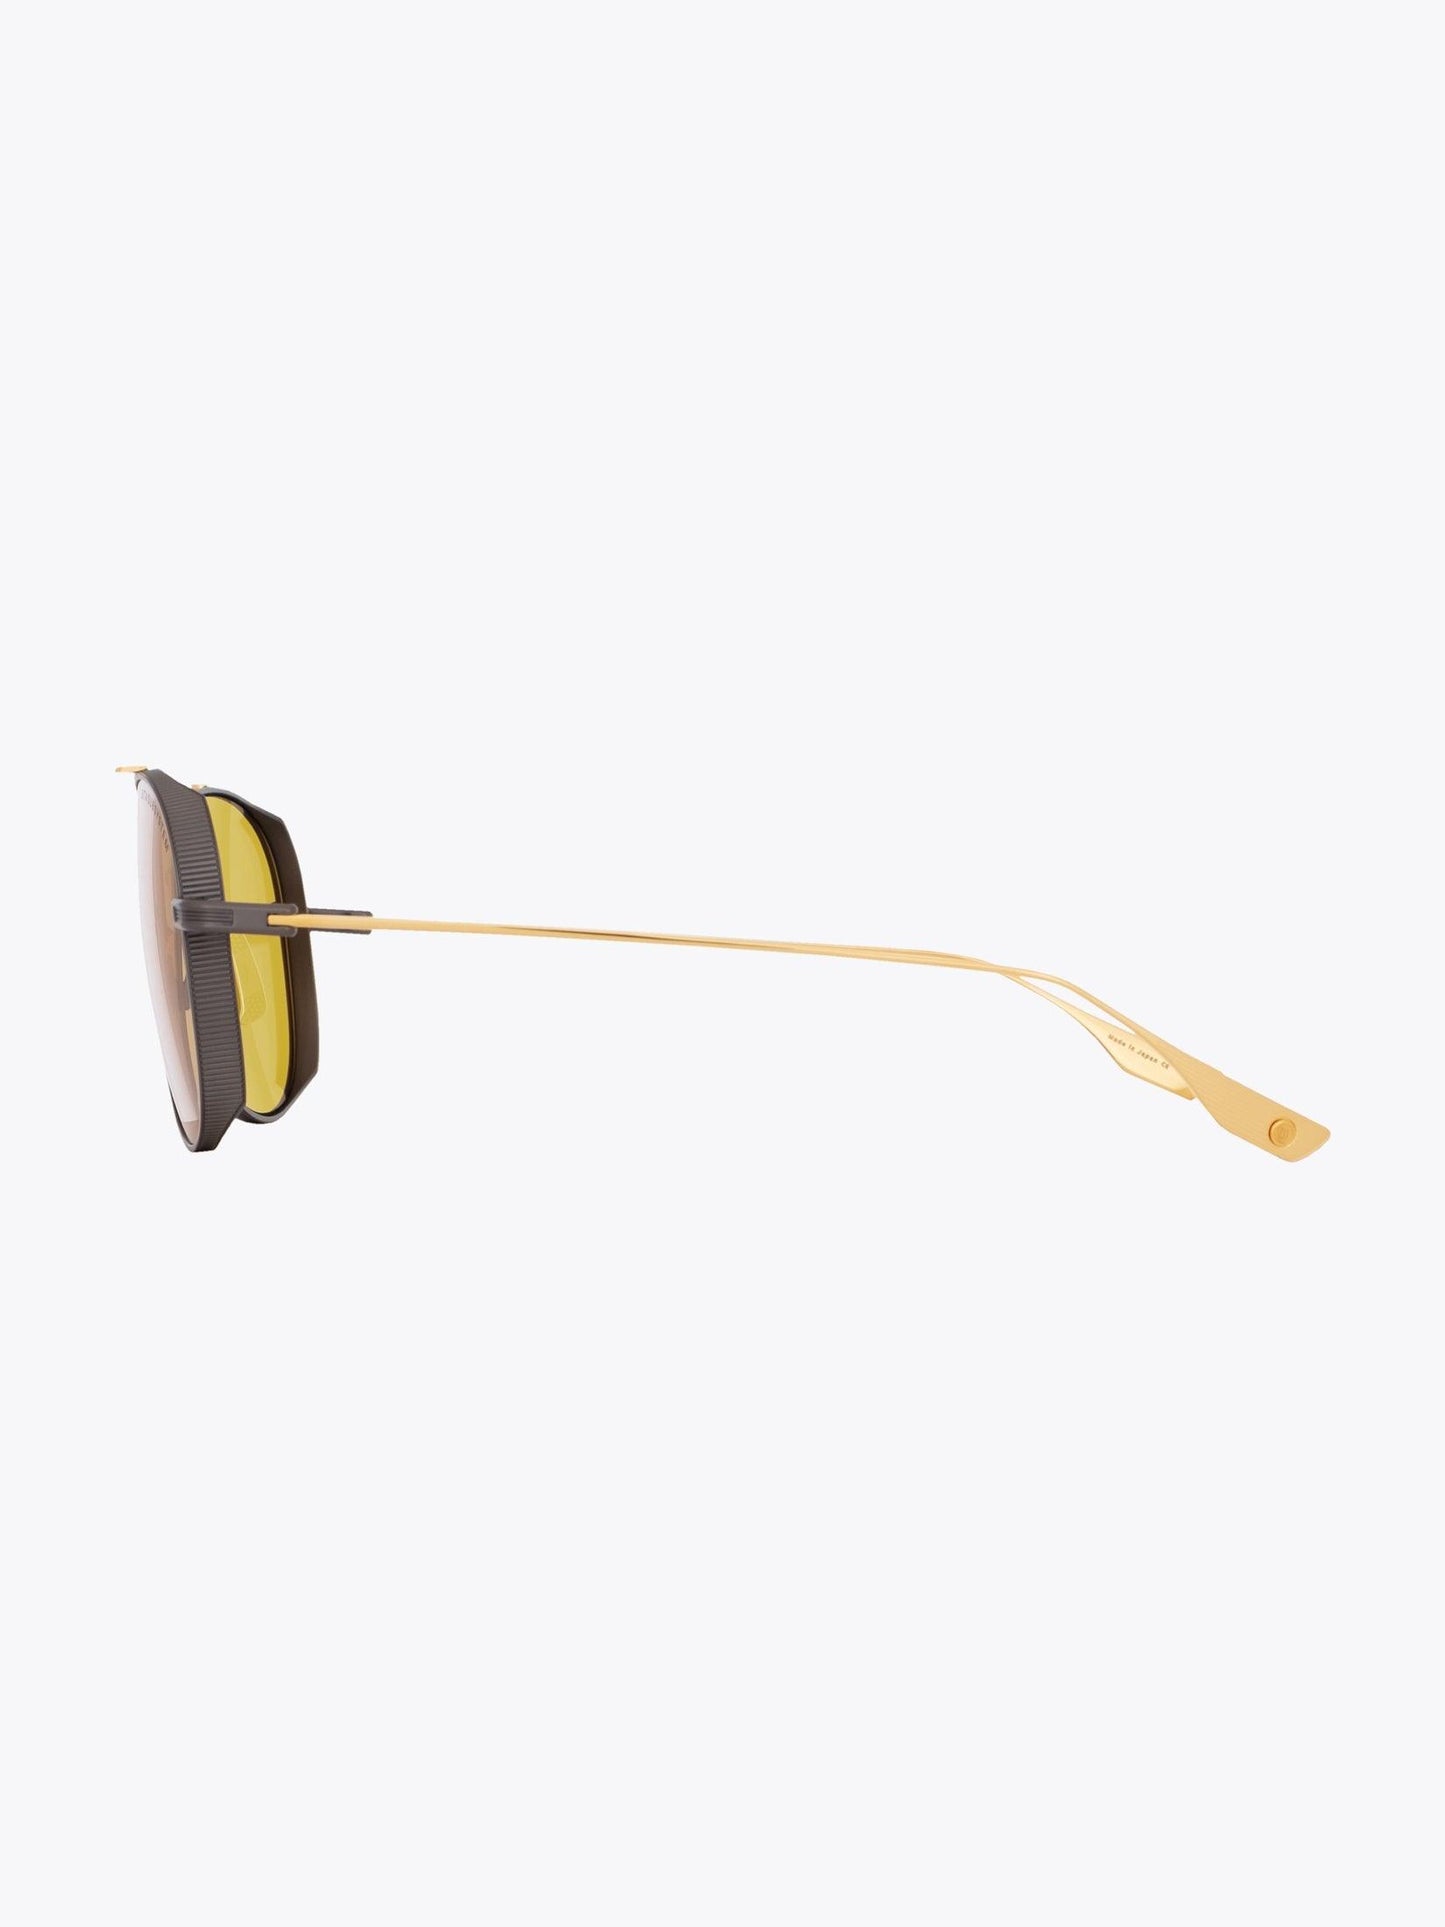 DITA Subsystem Iron Sunglasses - APODEP.com